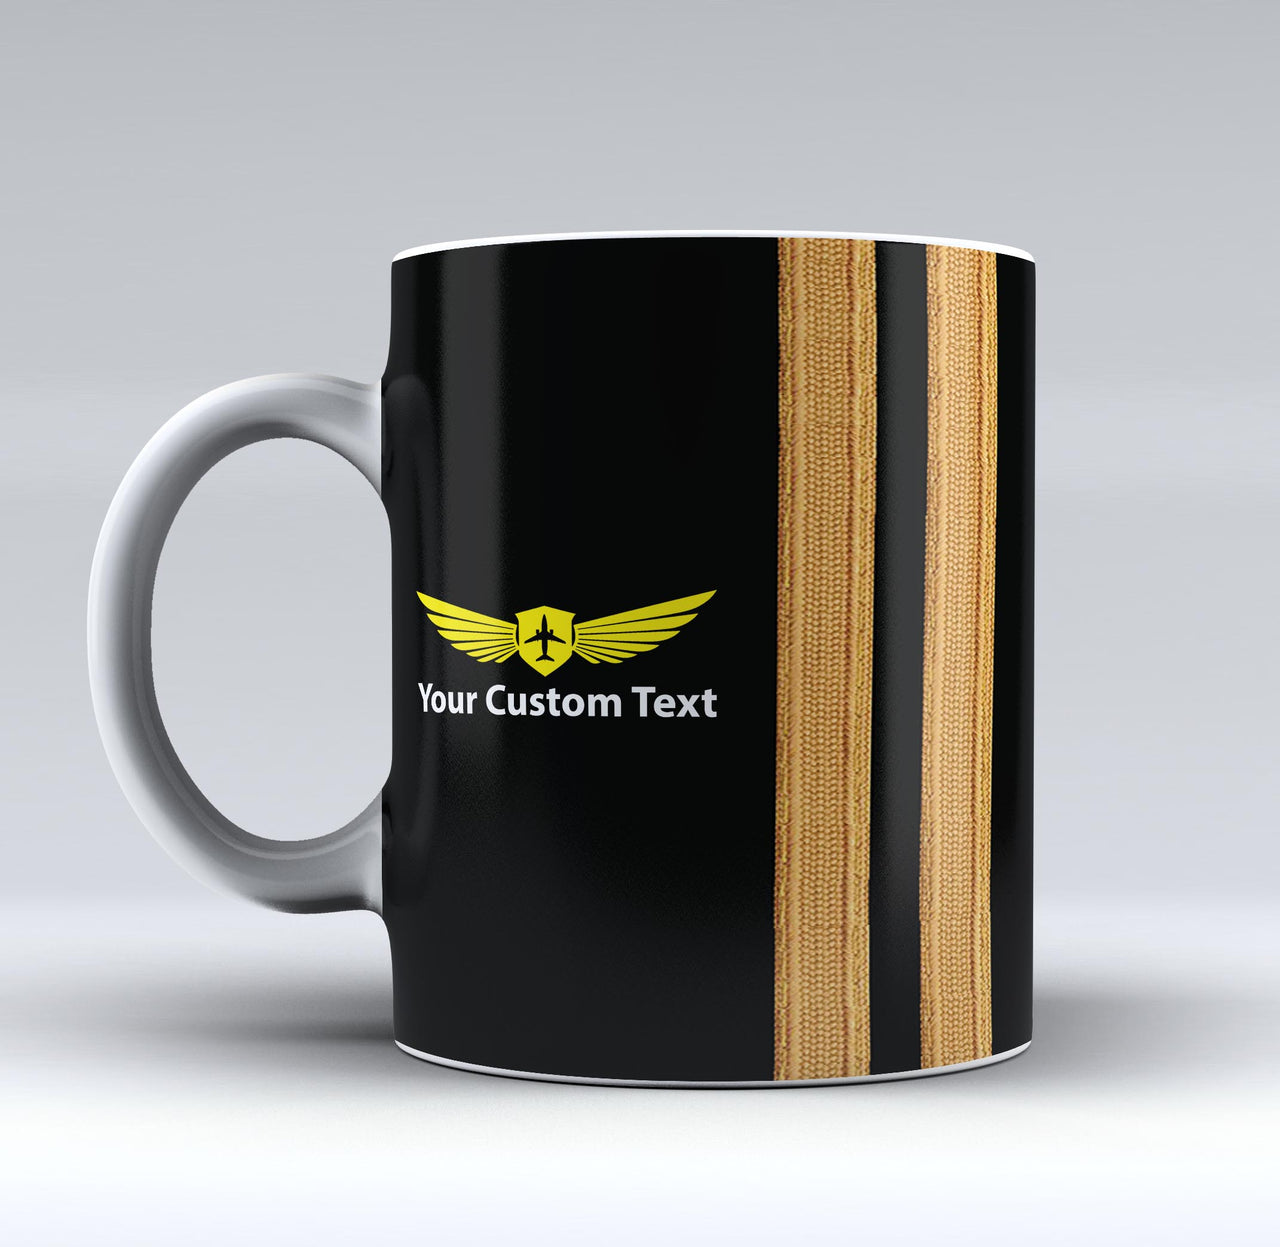 Customizable Name & Special Golden Epaulettes Designed Mugs